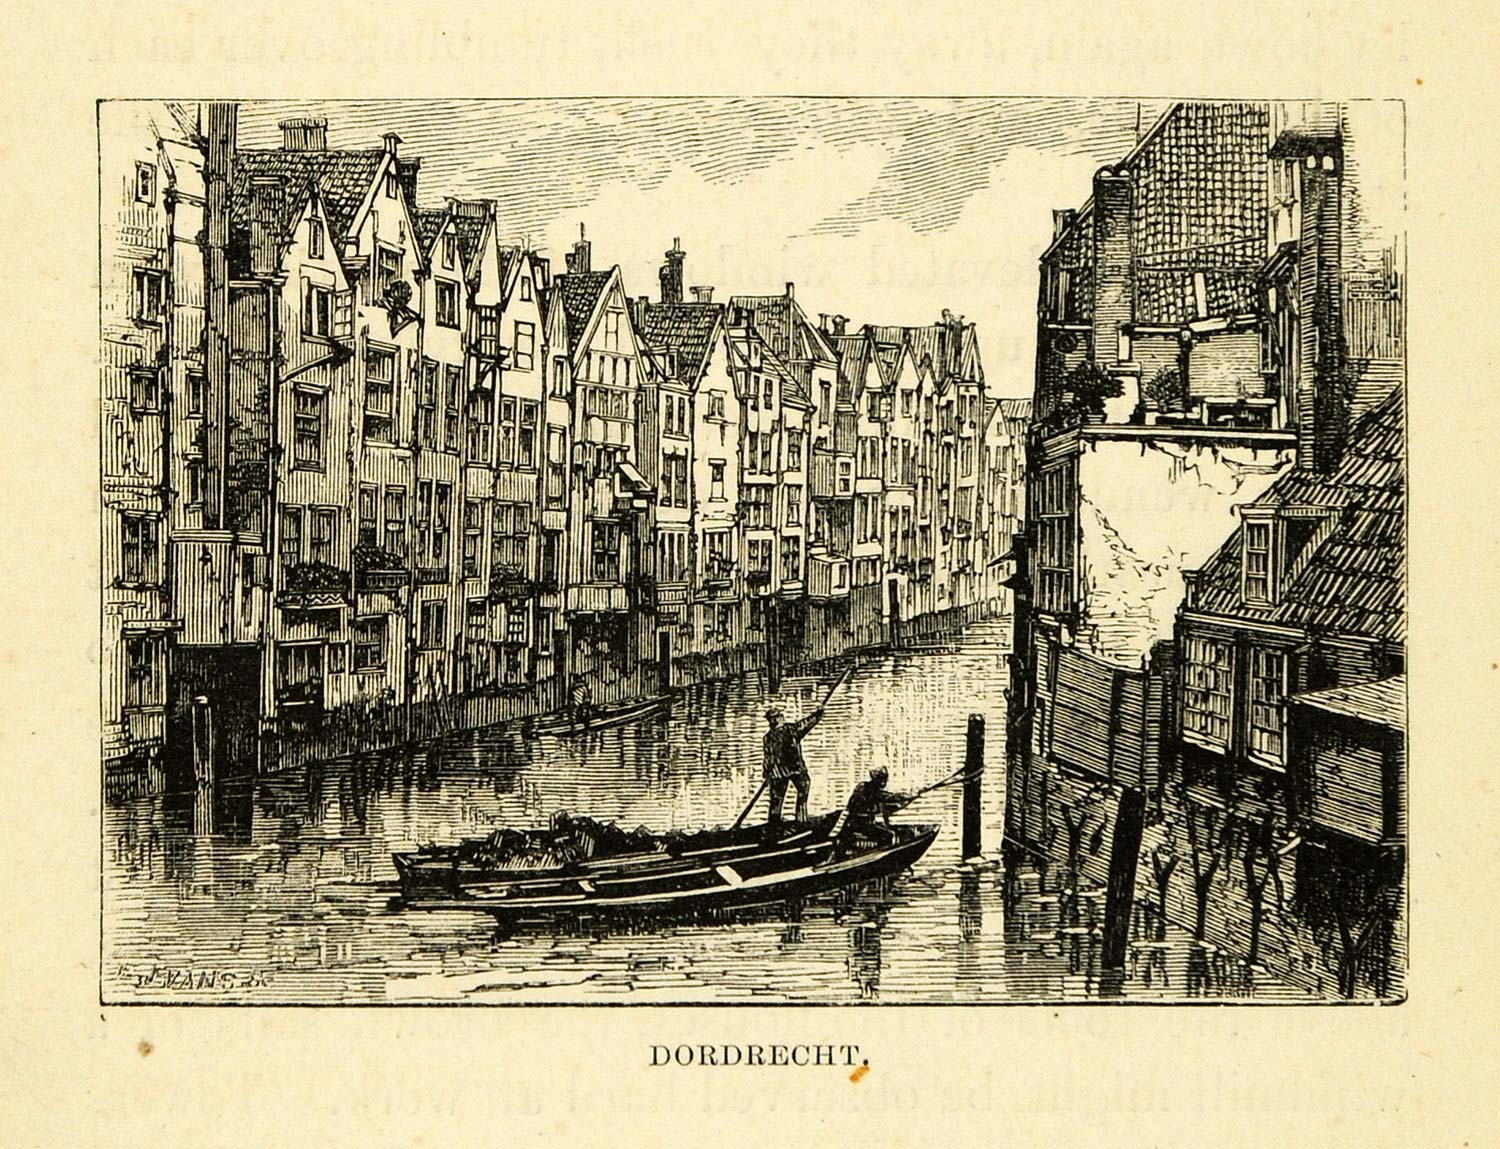 1877 Wood Engraving Art Dordrecht Holland Coastal Cityscape Boat Historic XGF1